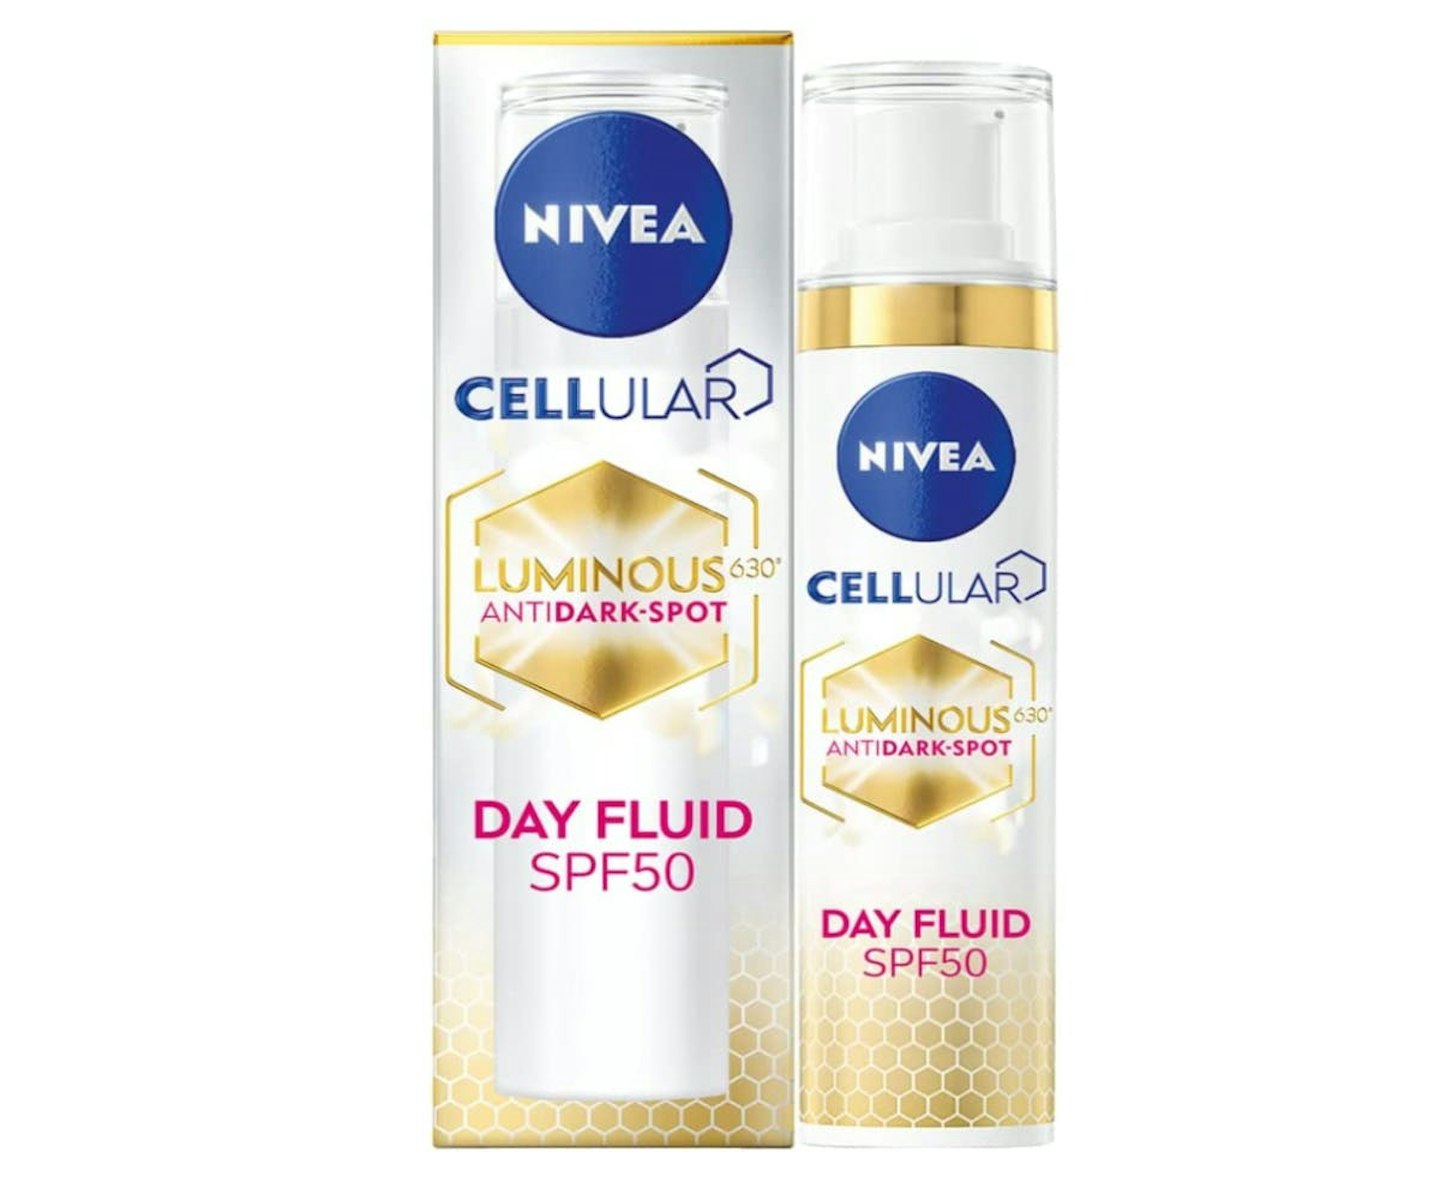 NIVEA Cellular LUMINOUS 630 Anti-Dark Spot Triple Protection Day Fluid SPF 50